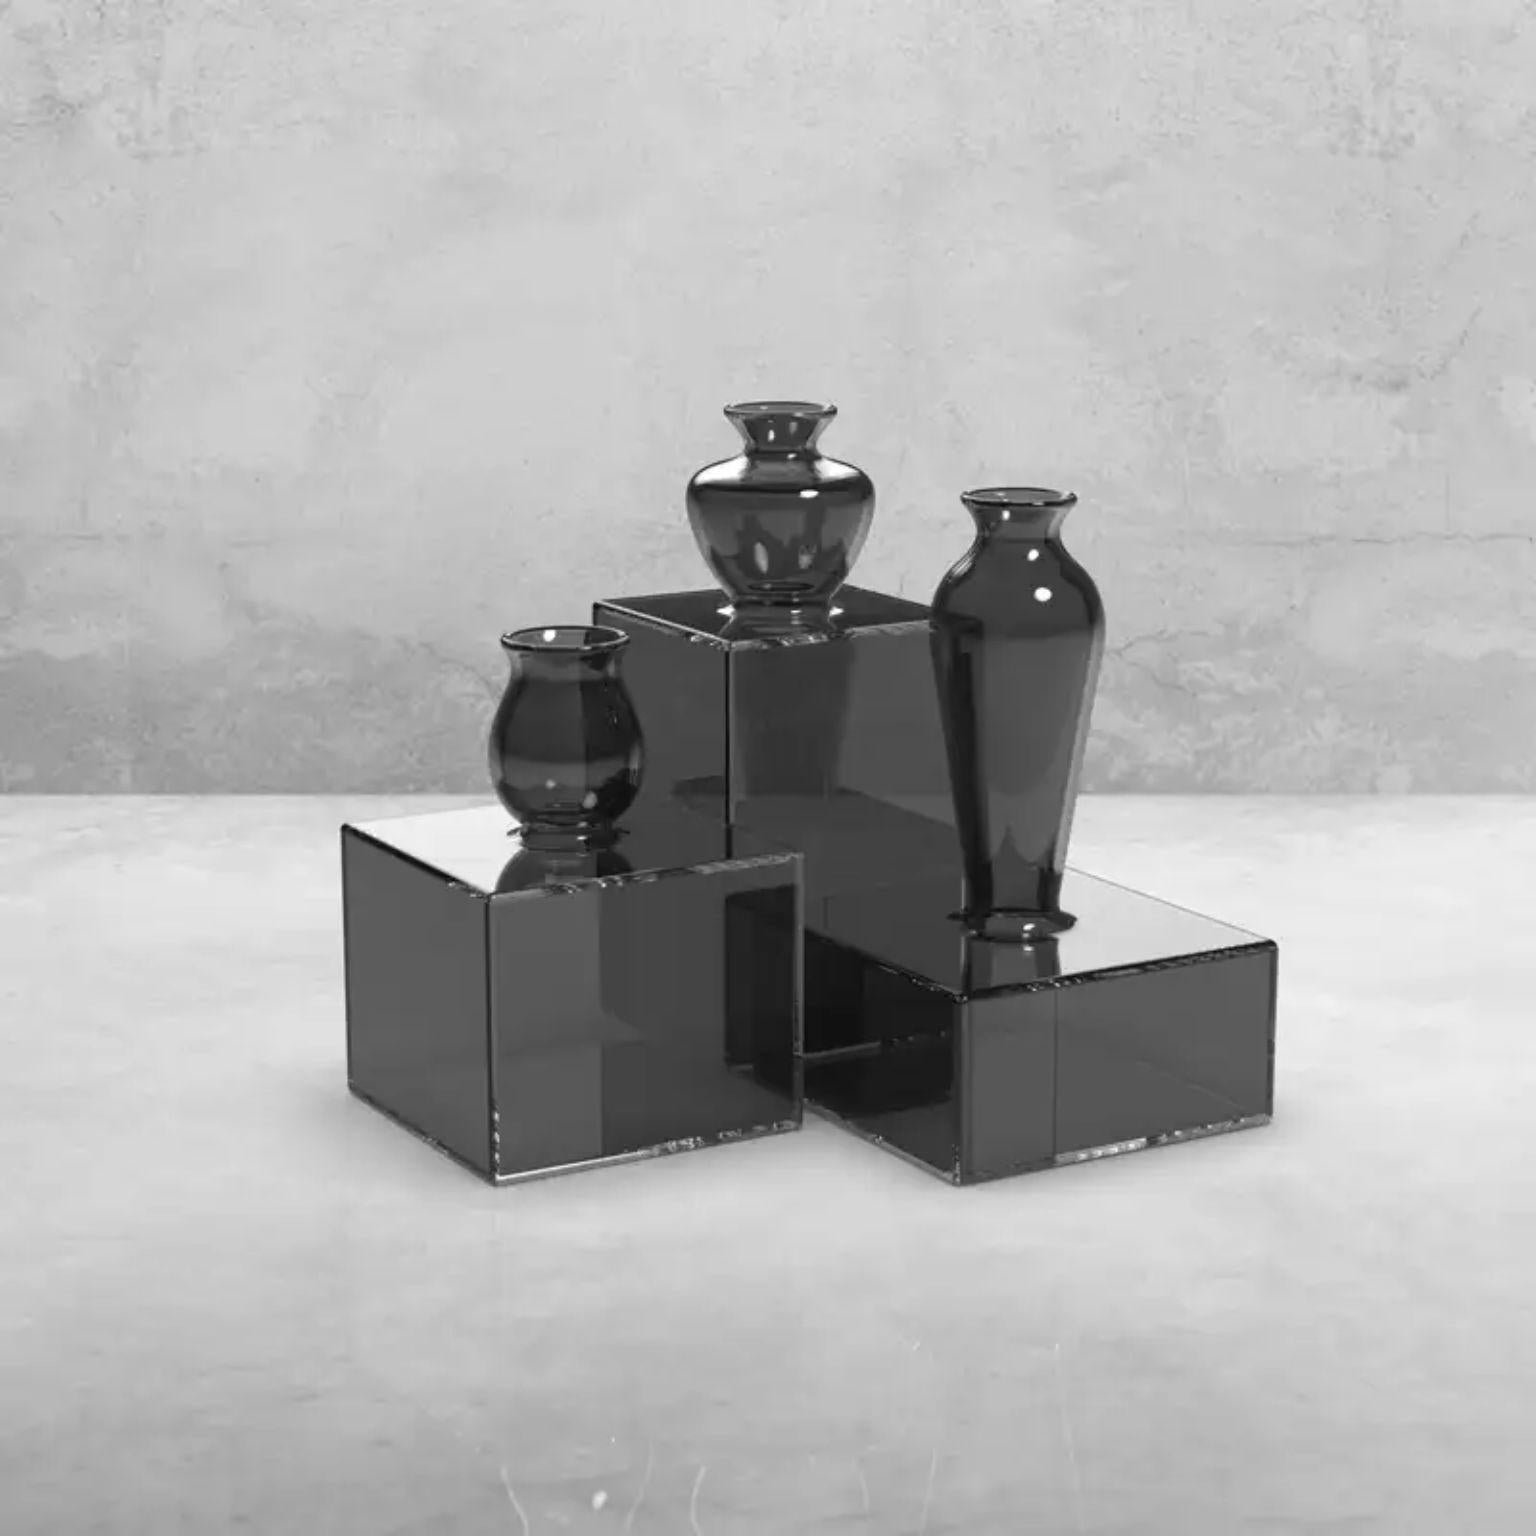 Set of 3 milo square black vases by Mason Editions
Designed by Quaglio Simonelli.
Dimensions: Medium vase: D 6.4 x W 6.4 x H 8.8 cm.
Tall vase: D 5.6 x W 5.6 x H 12.5 cm.
Low vase: D 7.1 x W 7.1 x H 11.5 cm.
Materials: Pyrex borosilicate